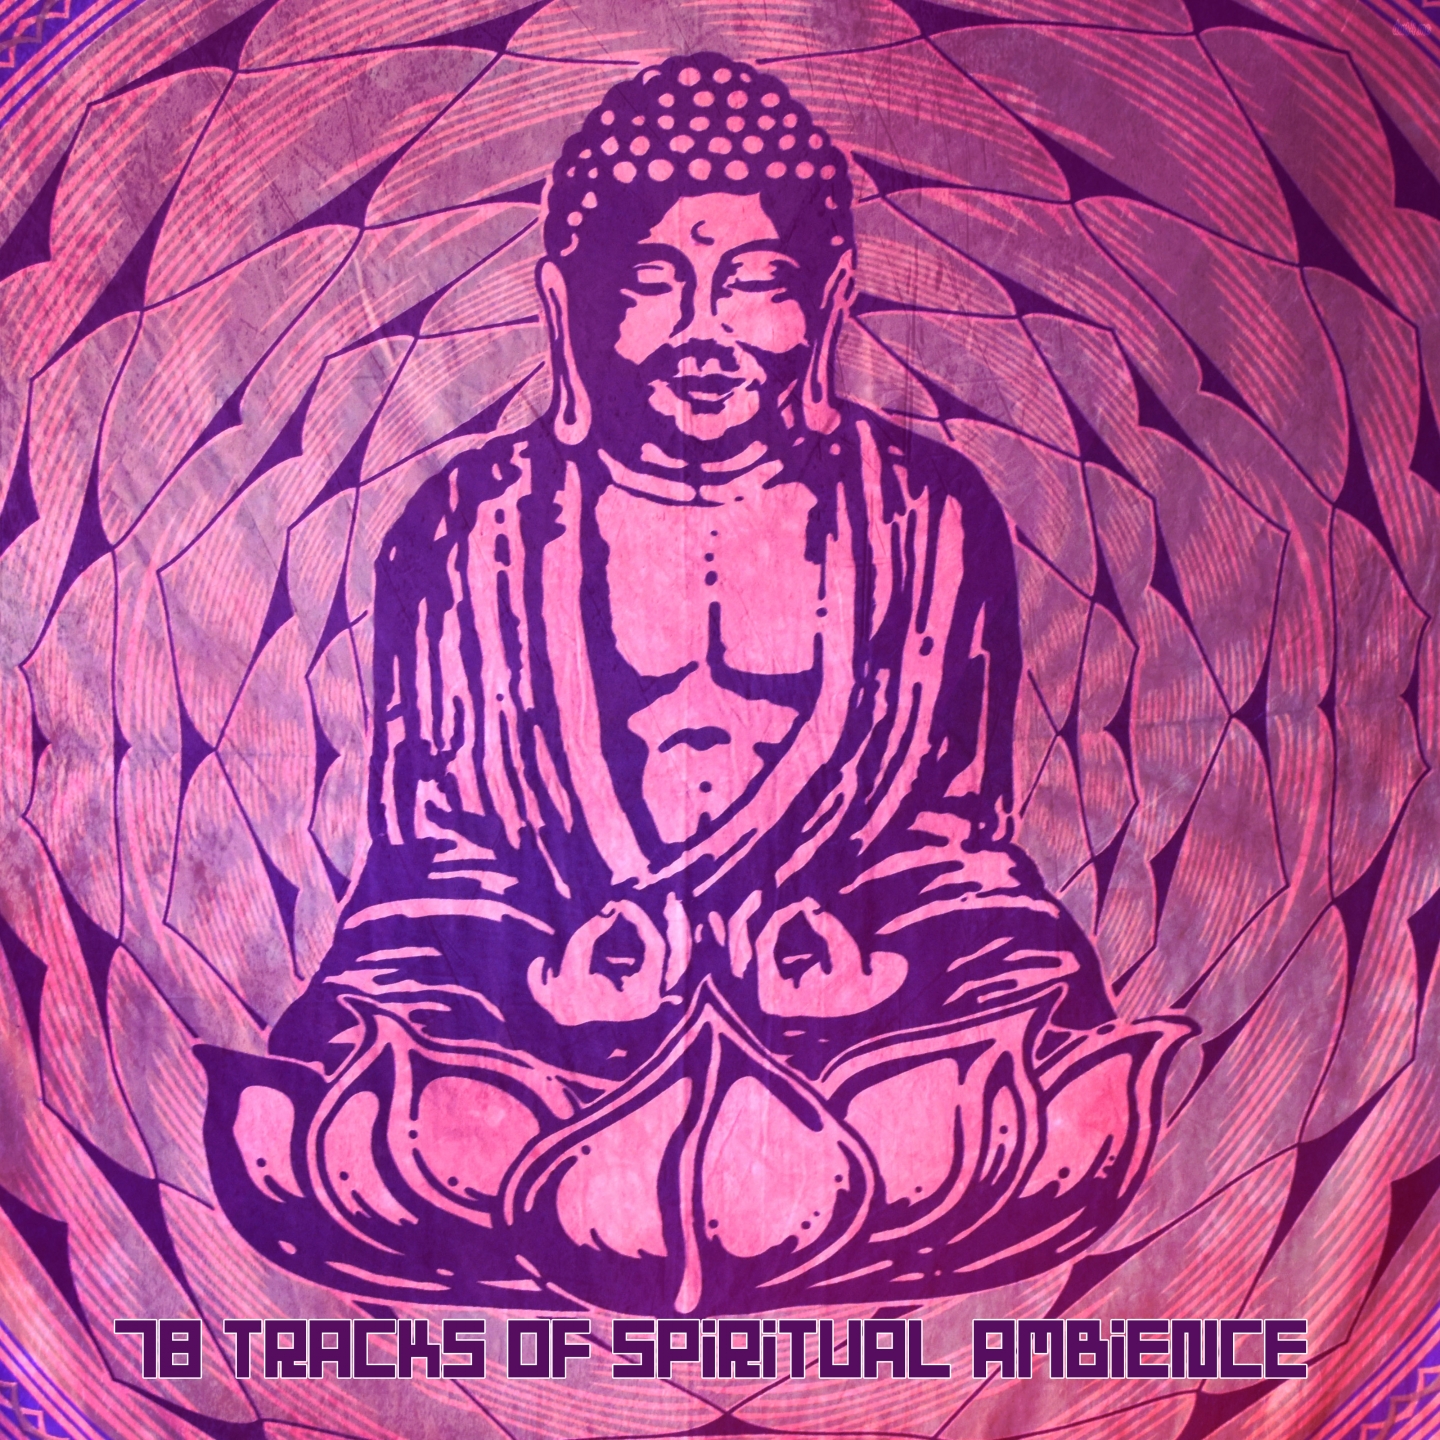 78 Tracks Of Spiritual Ambience